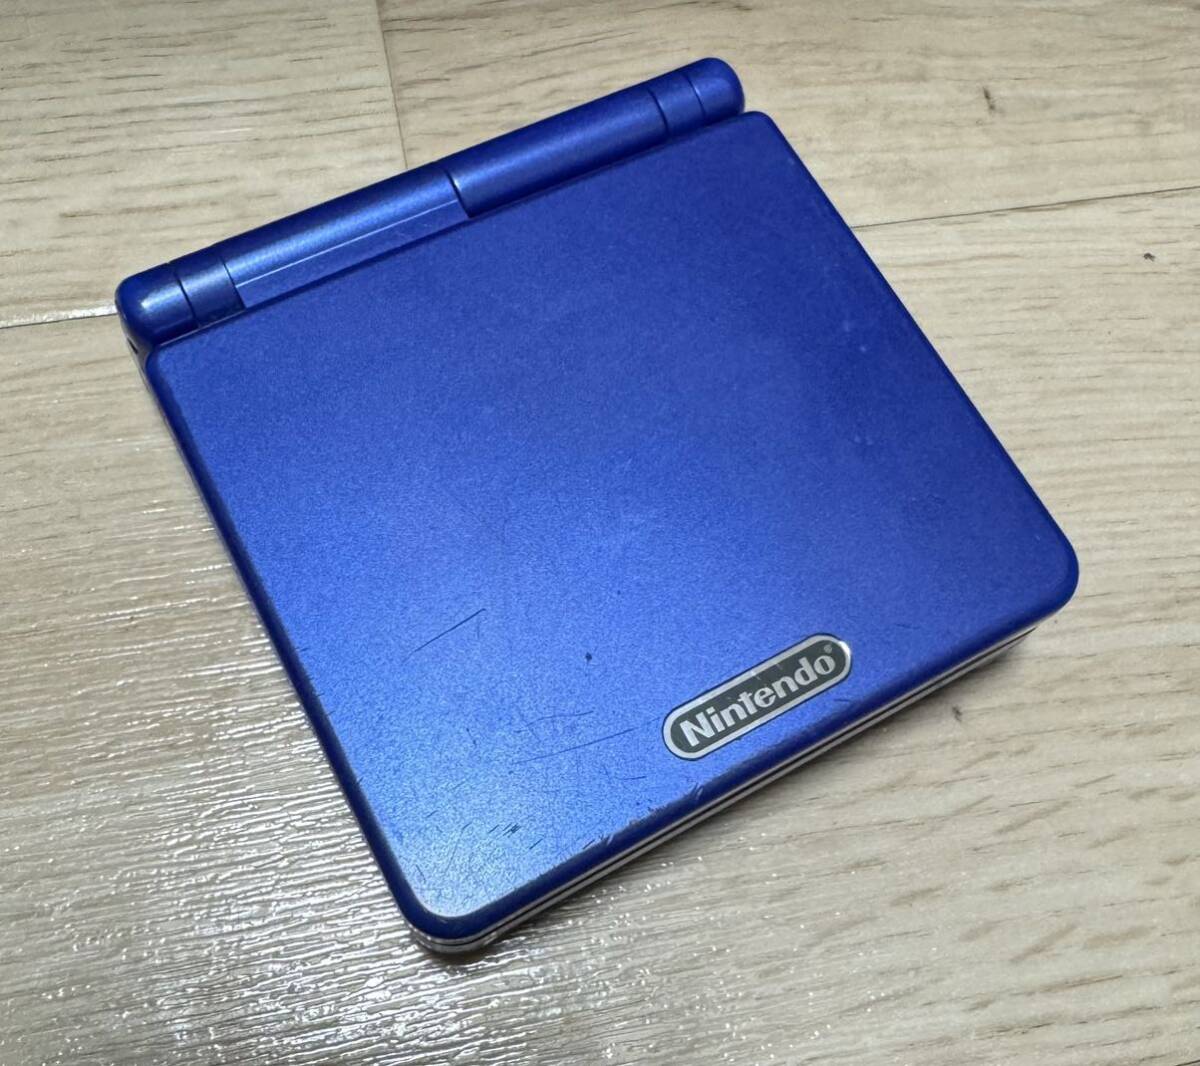 Nintendo GBA SP body azulite blue Game Boy Advance SP Nintendo free shipping 